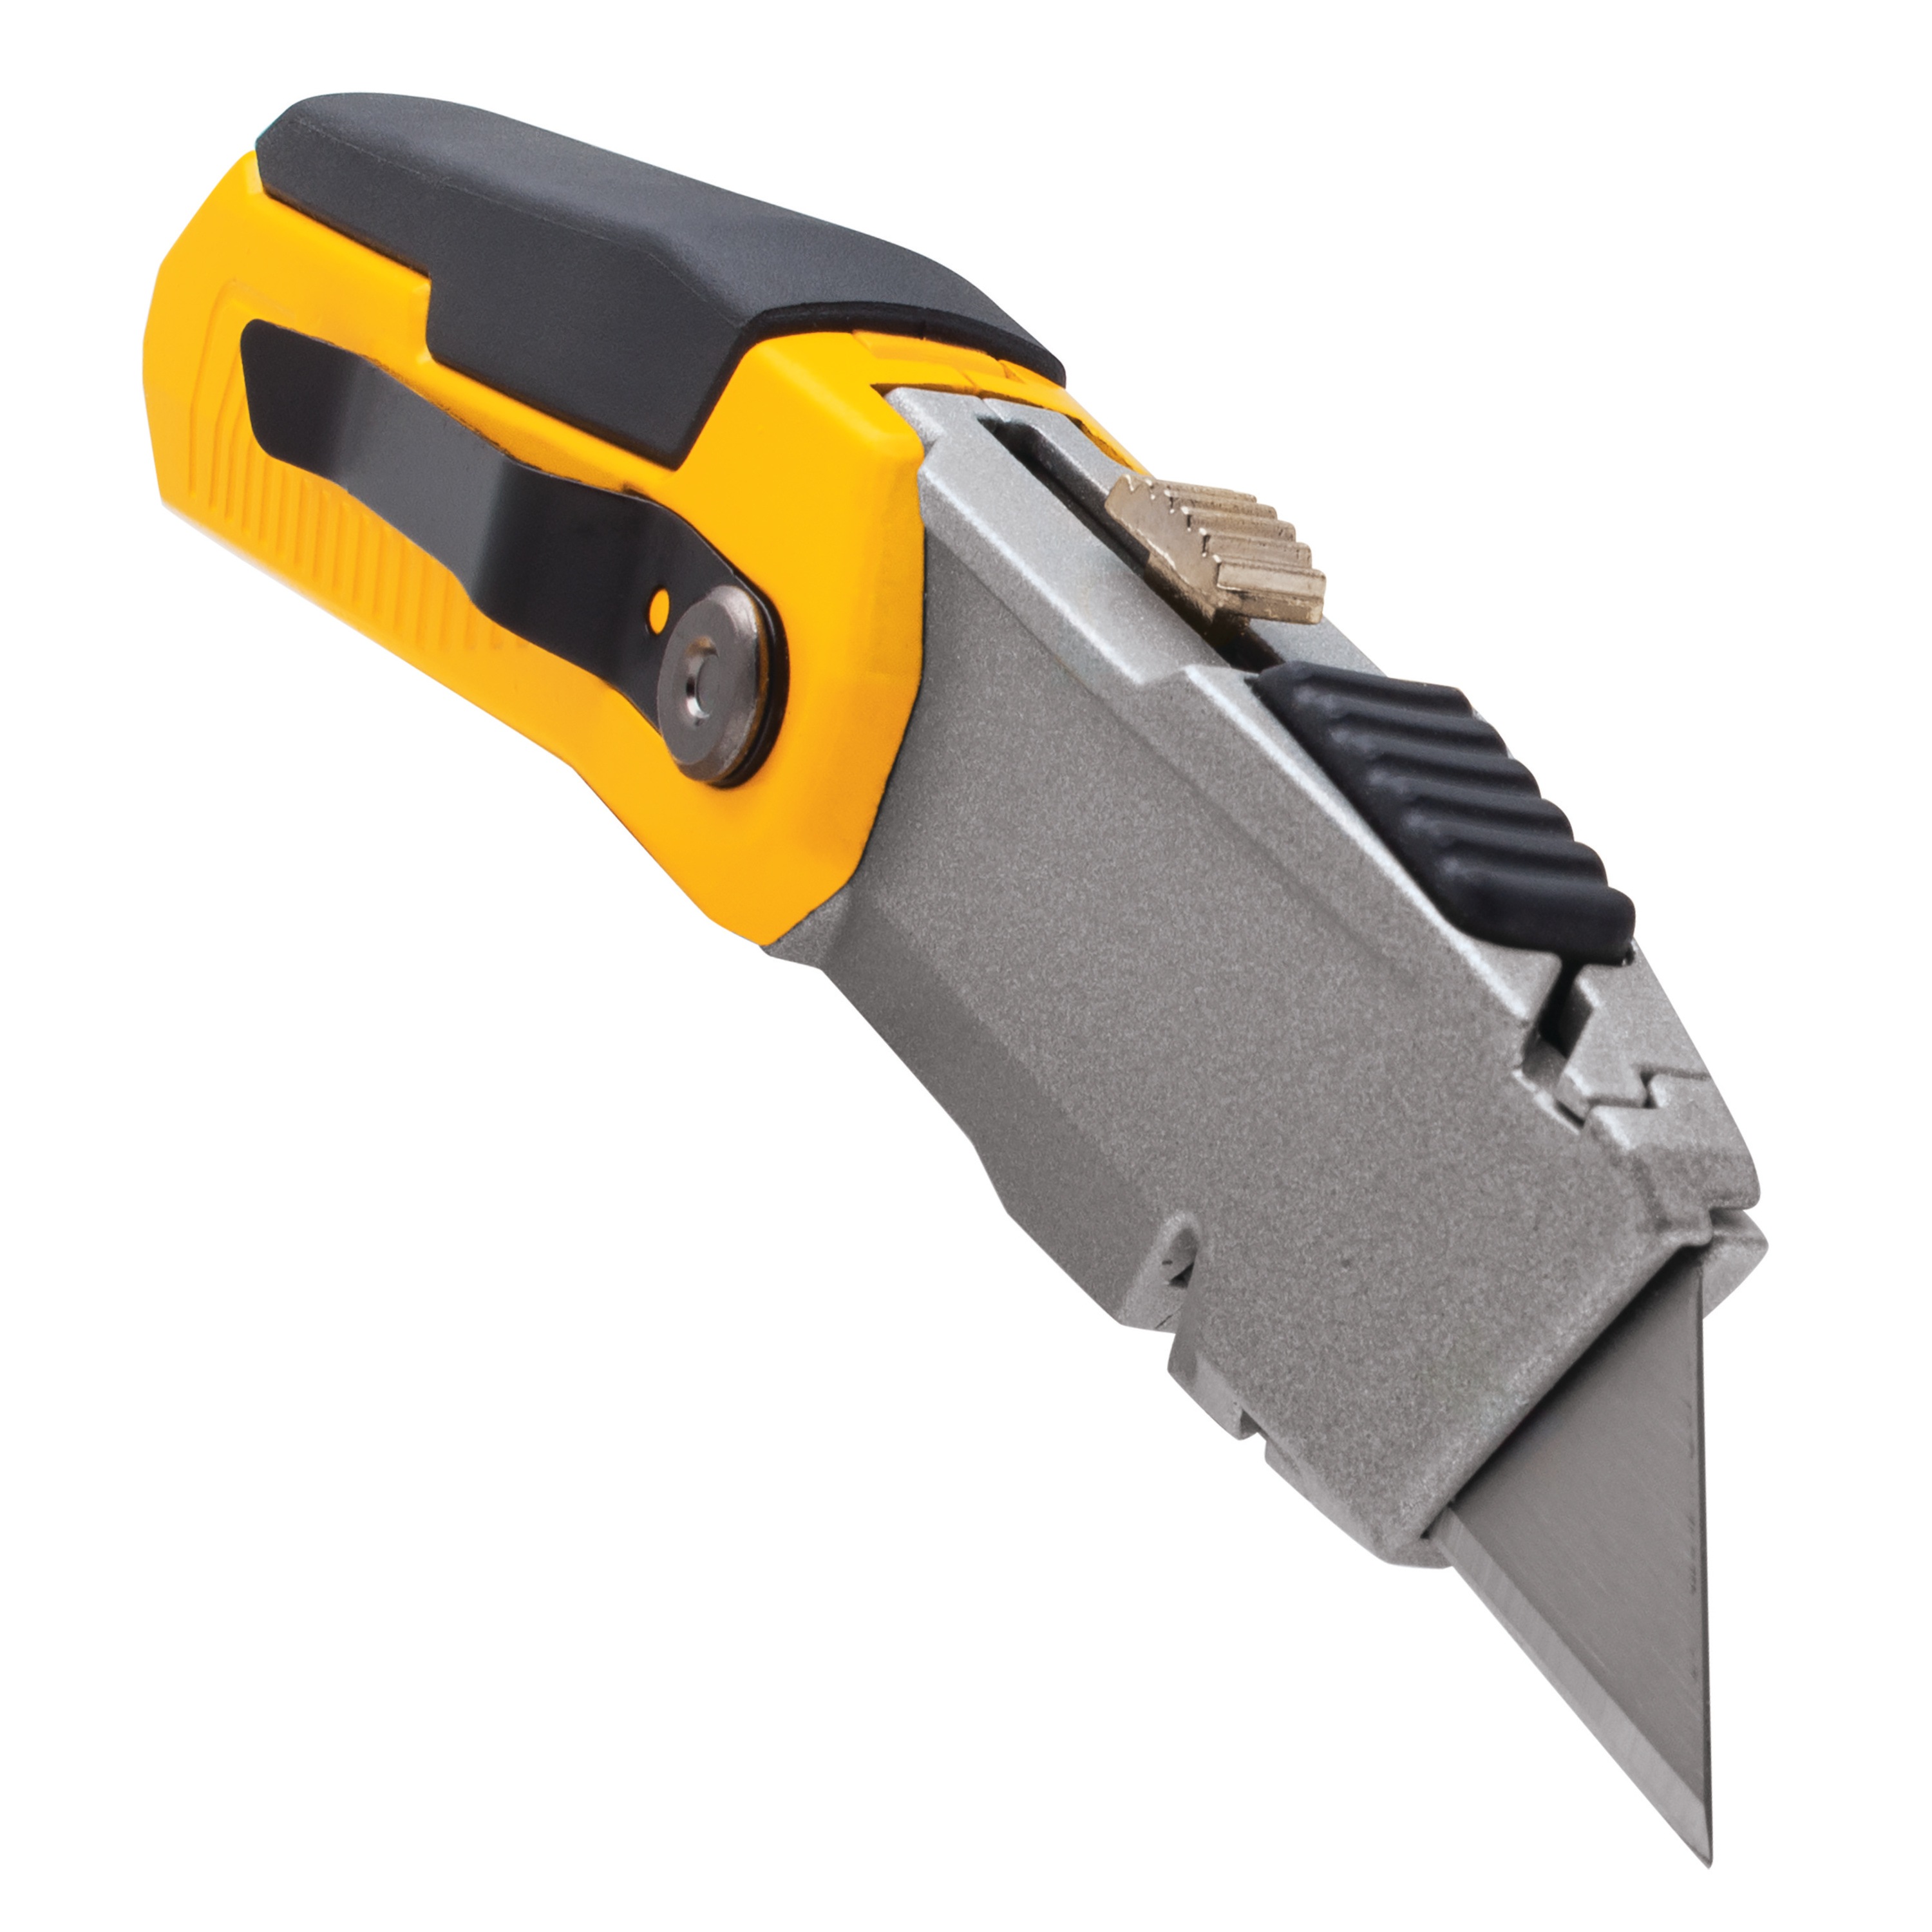 Profile of Folding retractable utility knife.